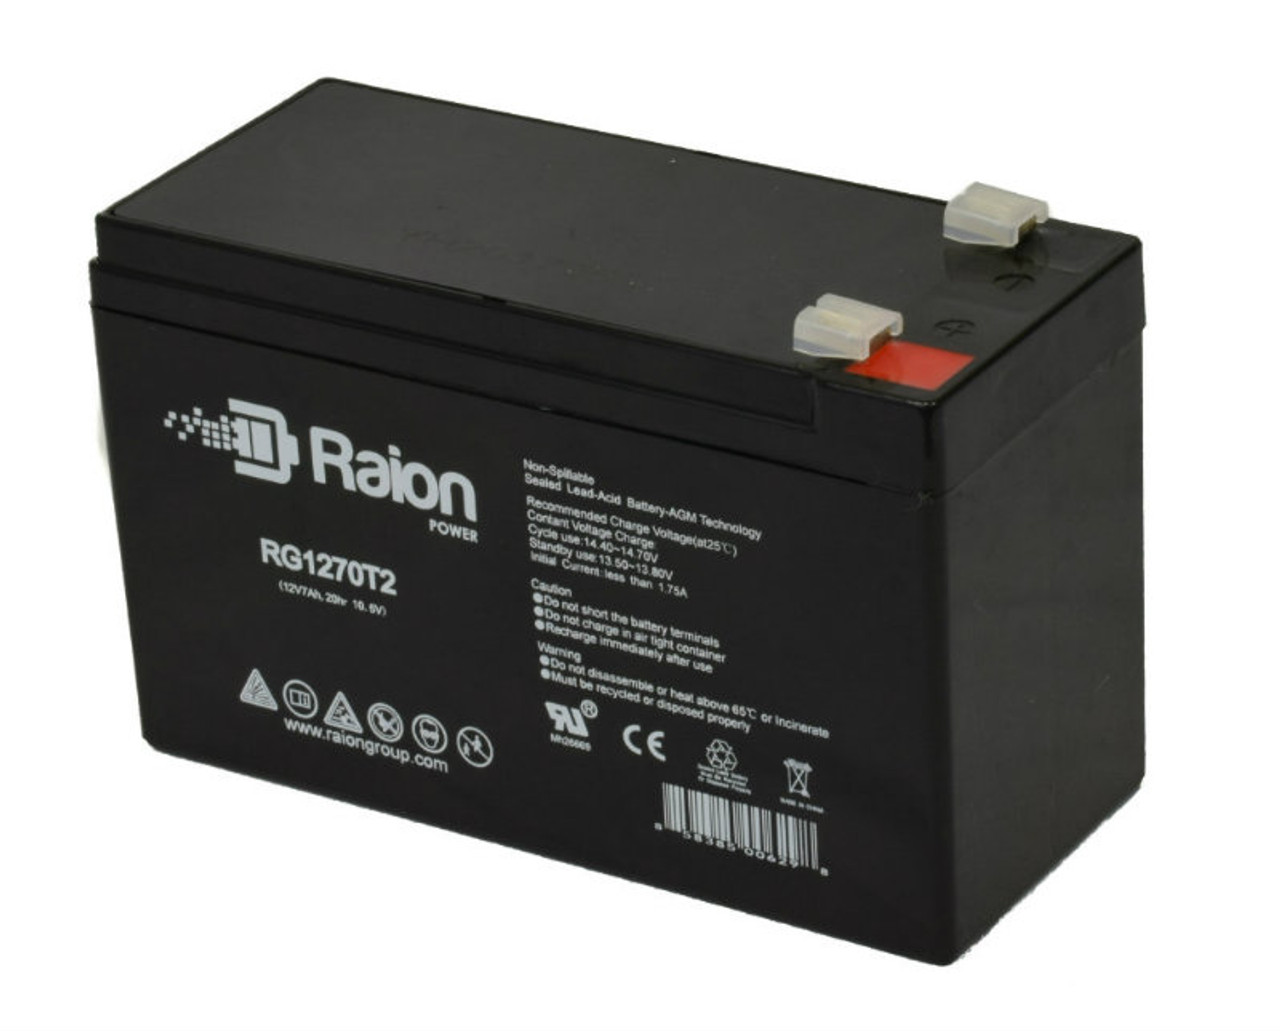 Raion Power Replacement 12V 7Ah Battery for Cyclops Spotlight DE-30020 - 1 Pack